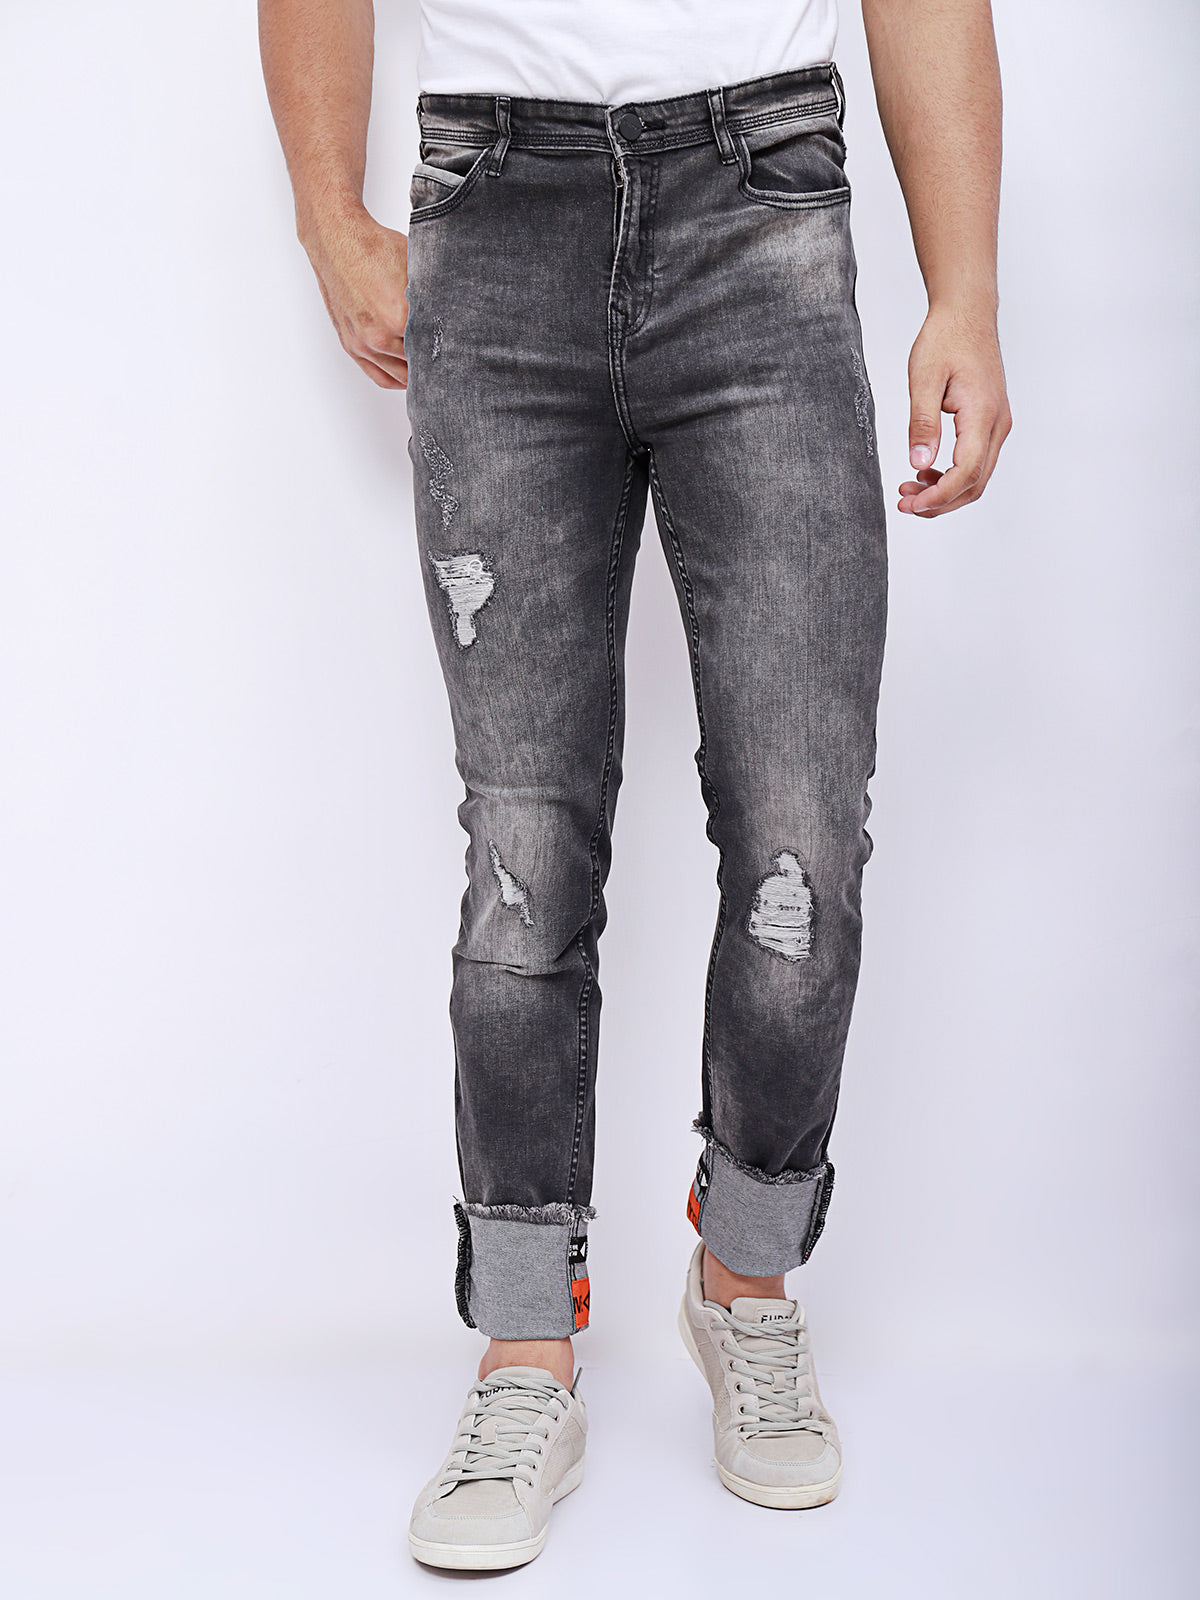 Men's Grey Denim Jeans - FMBP20-018